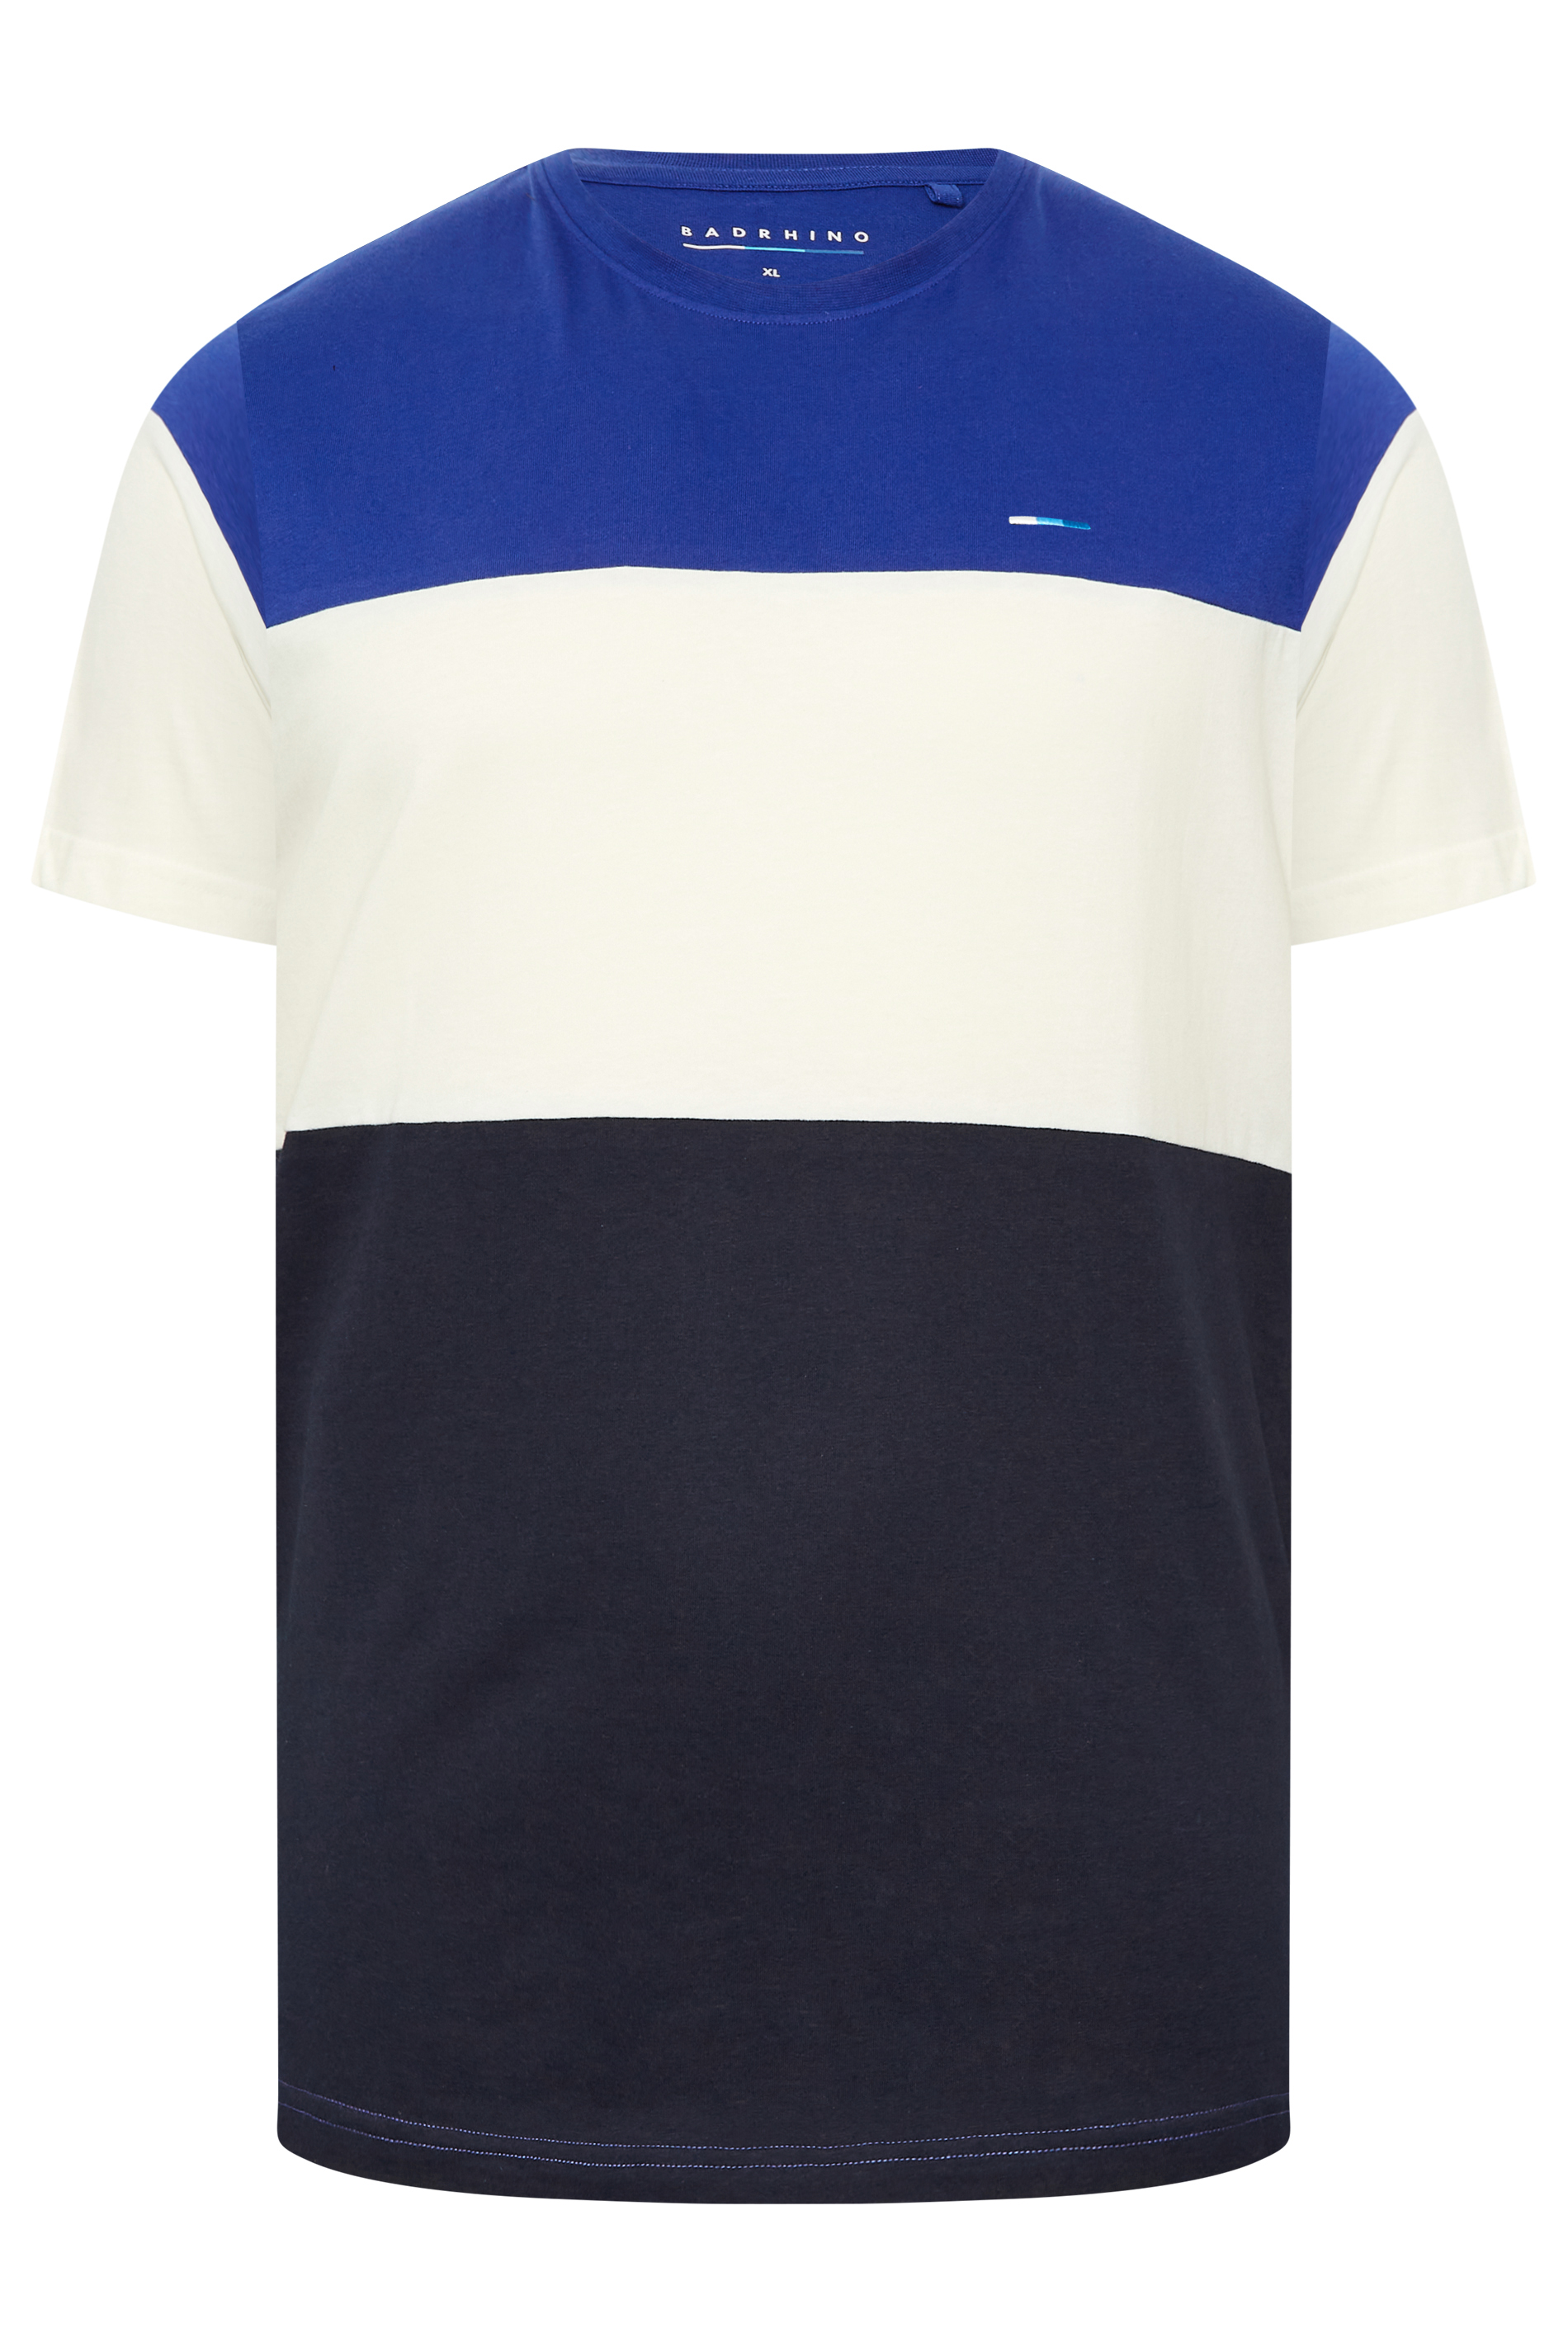 BadRhino Big & Tall Blue Colour Block T-Shirt | BadRhino 3